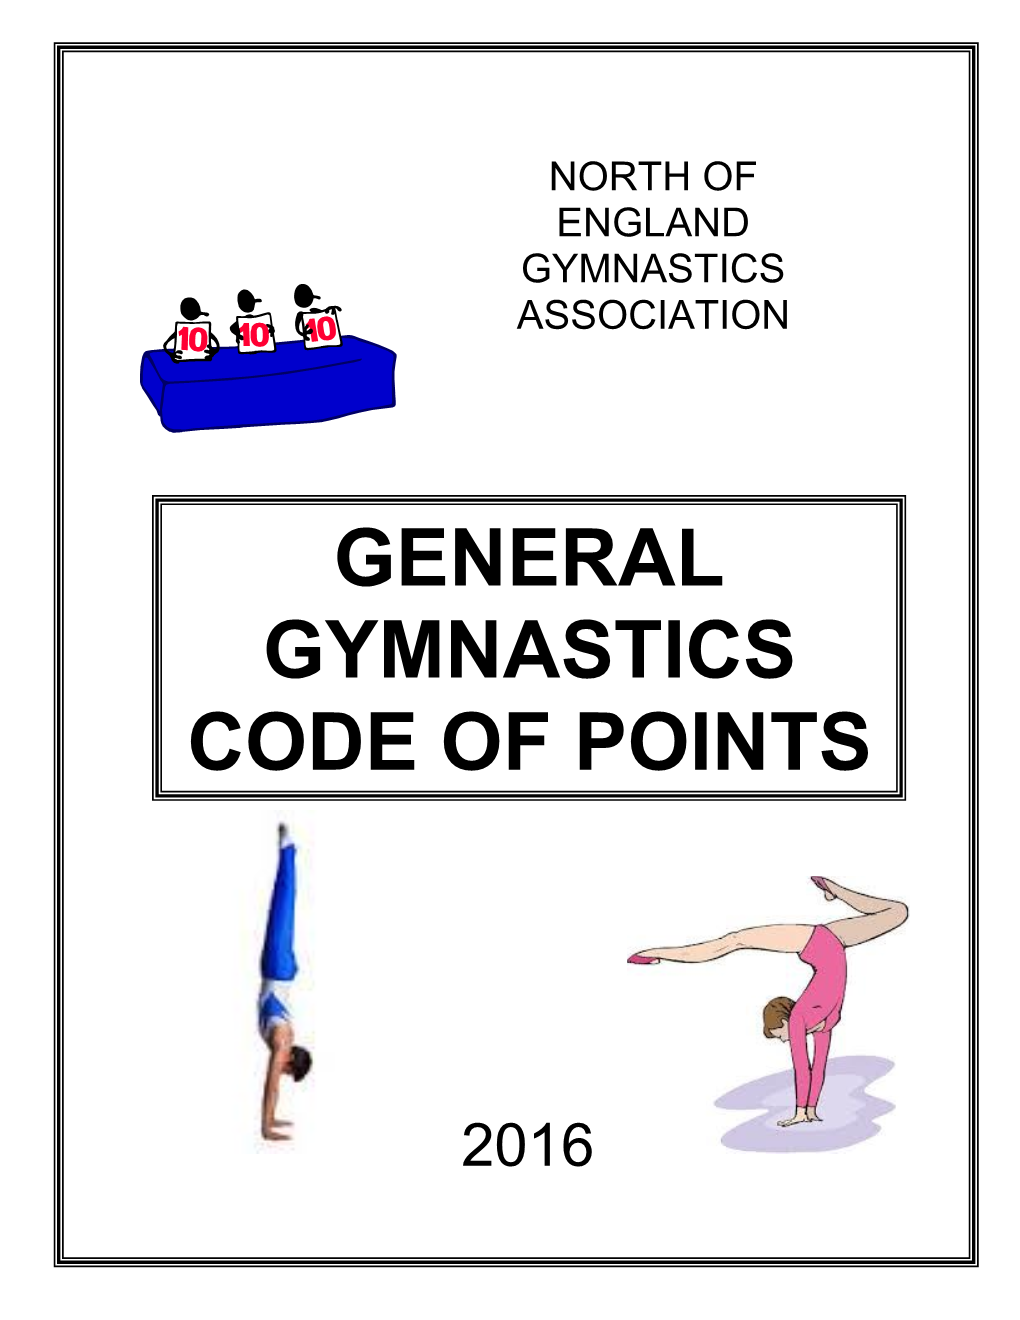 General Gymnastics Code of Points